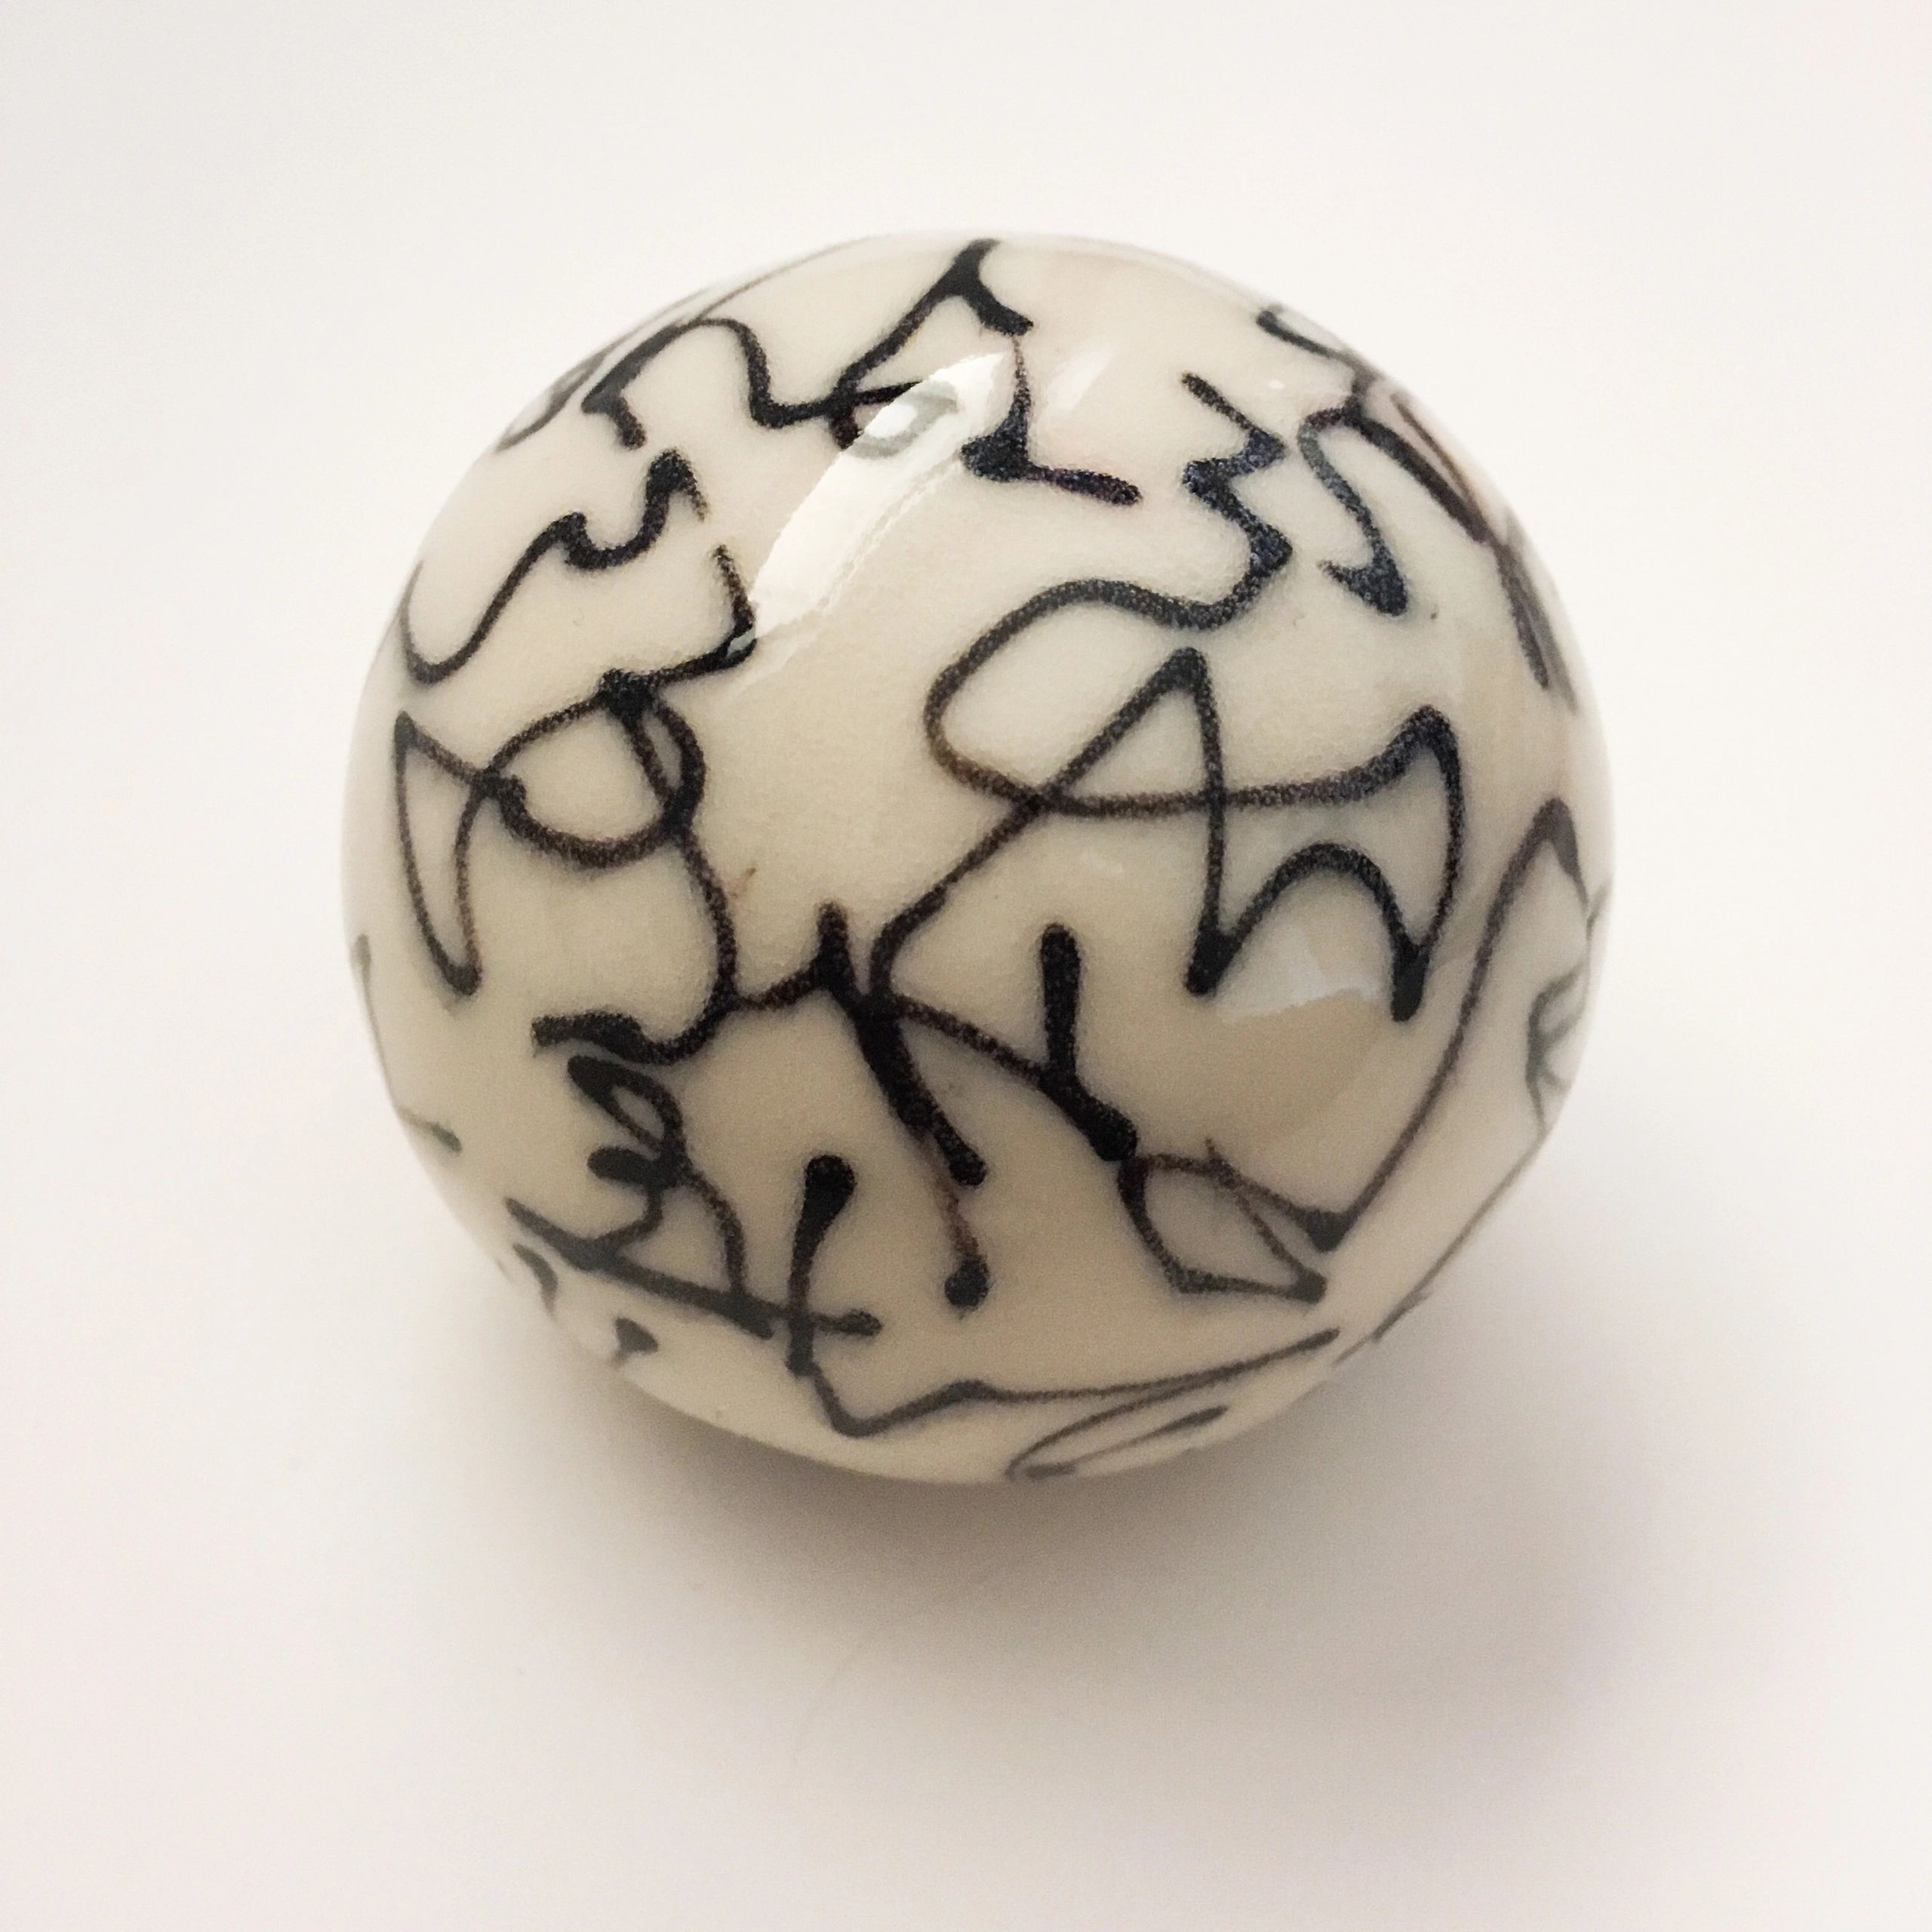 Palm sized porcelain sphere. Glazed. 2018.